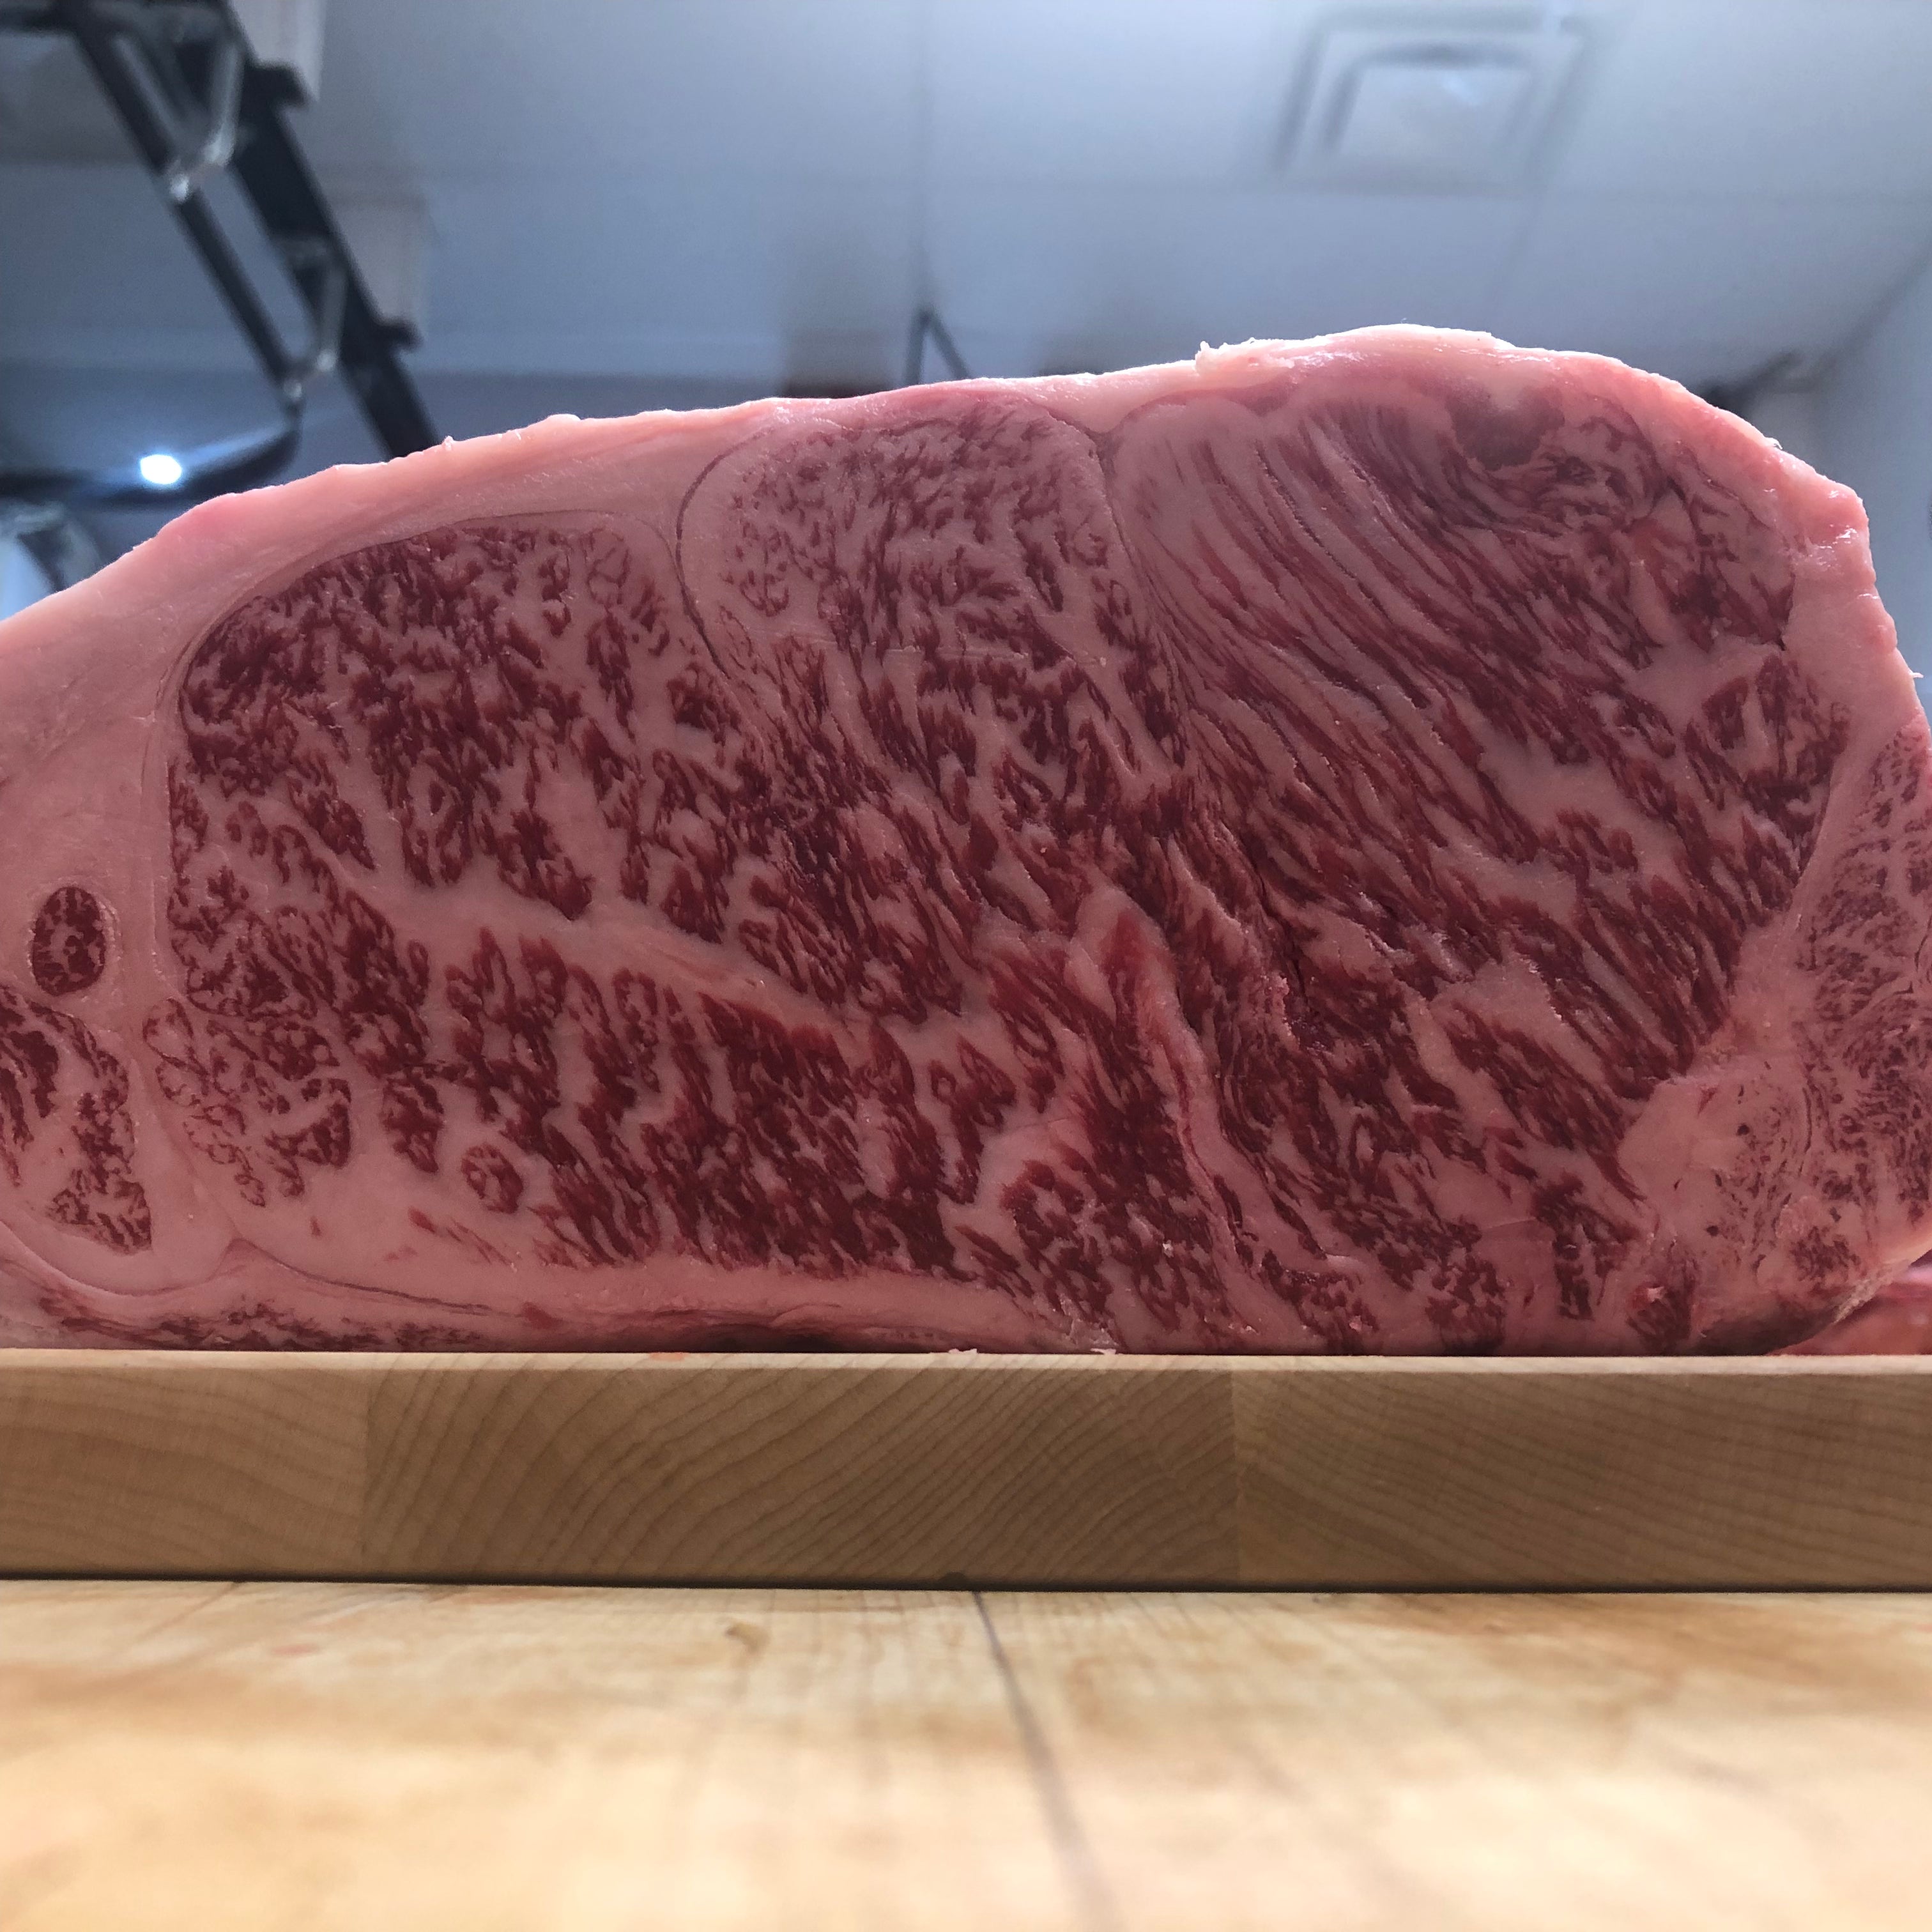 Gourmet Wholesaler - Japanese Wagyu Beef Striploin, A5